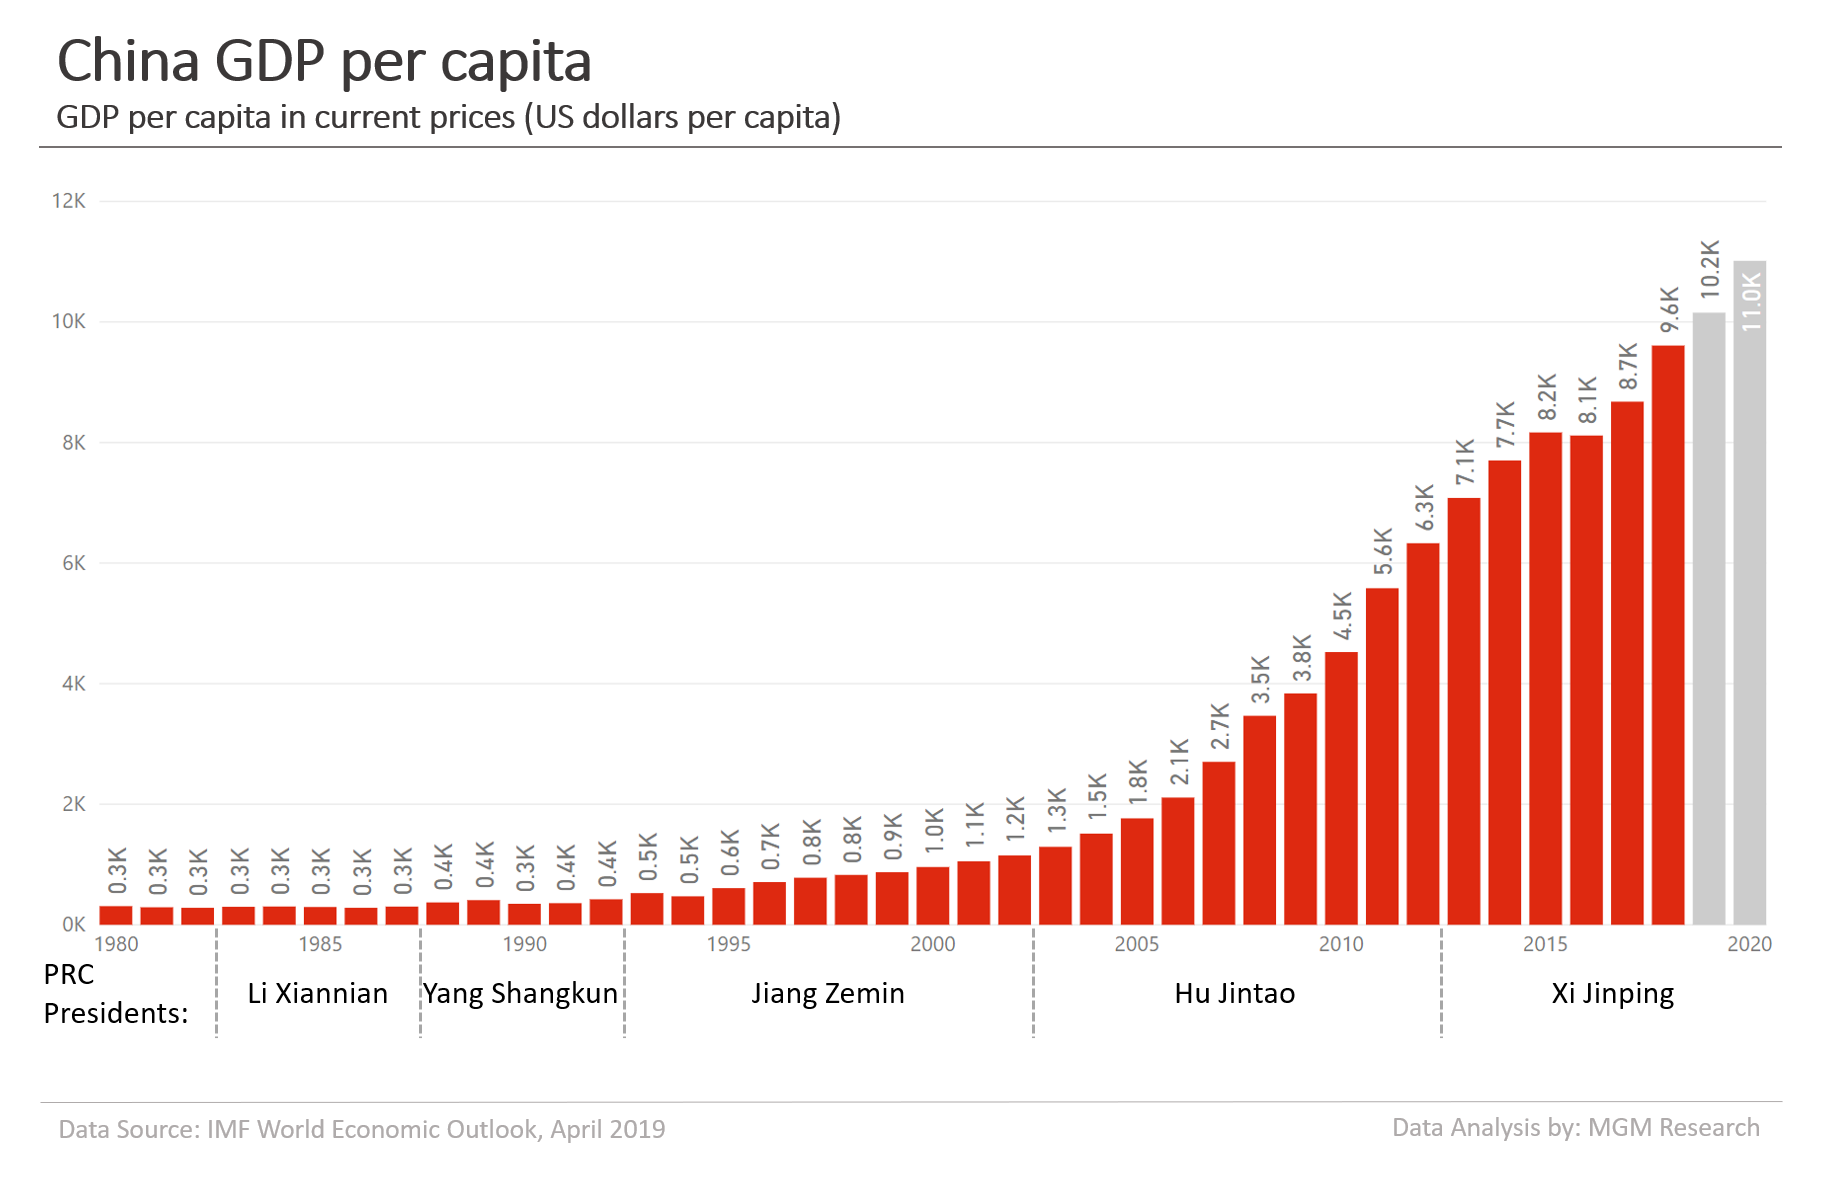 China GDP per capita 1980-2020